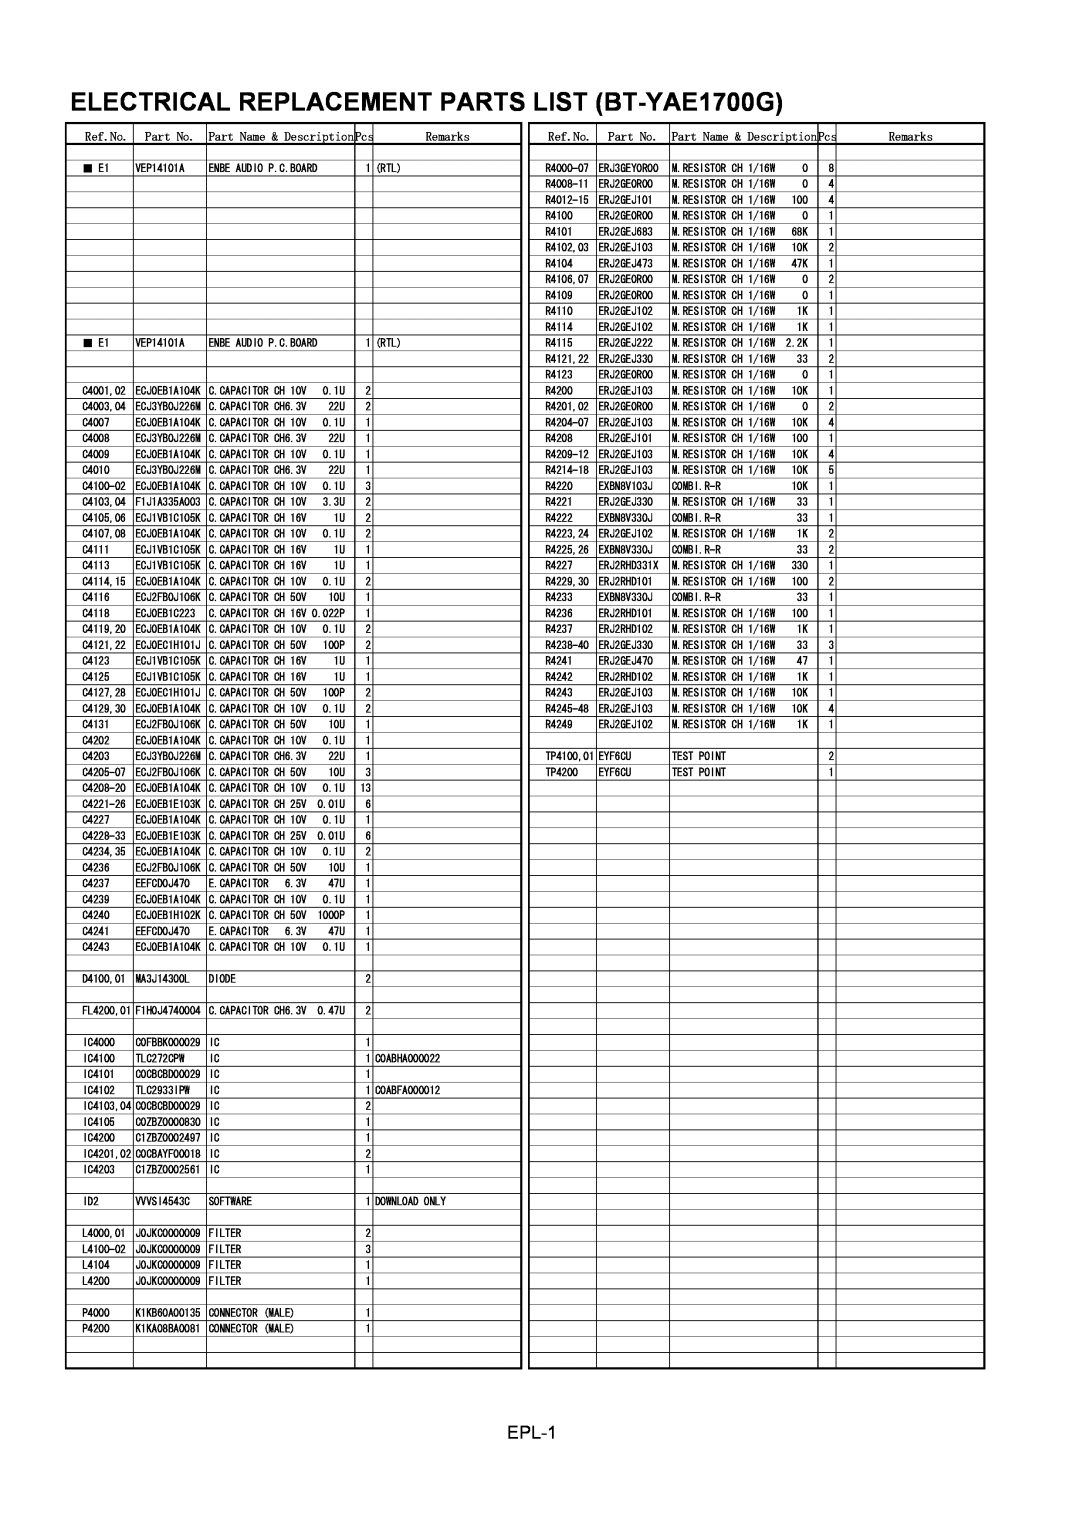 Panasonic BT-LH1700WMC, BT-LH1700WP manual ELECTRICAL REPLACEMENT PARTS LIST BT-YAE1700G, EPL-1, Ref.No, Remarks 